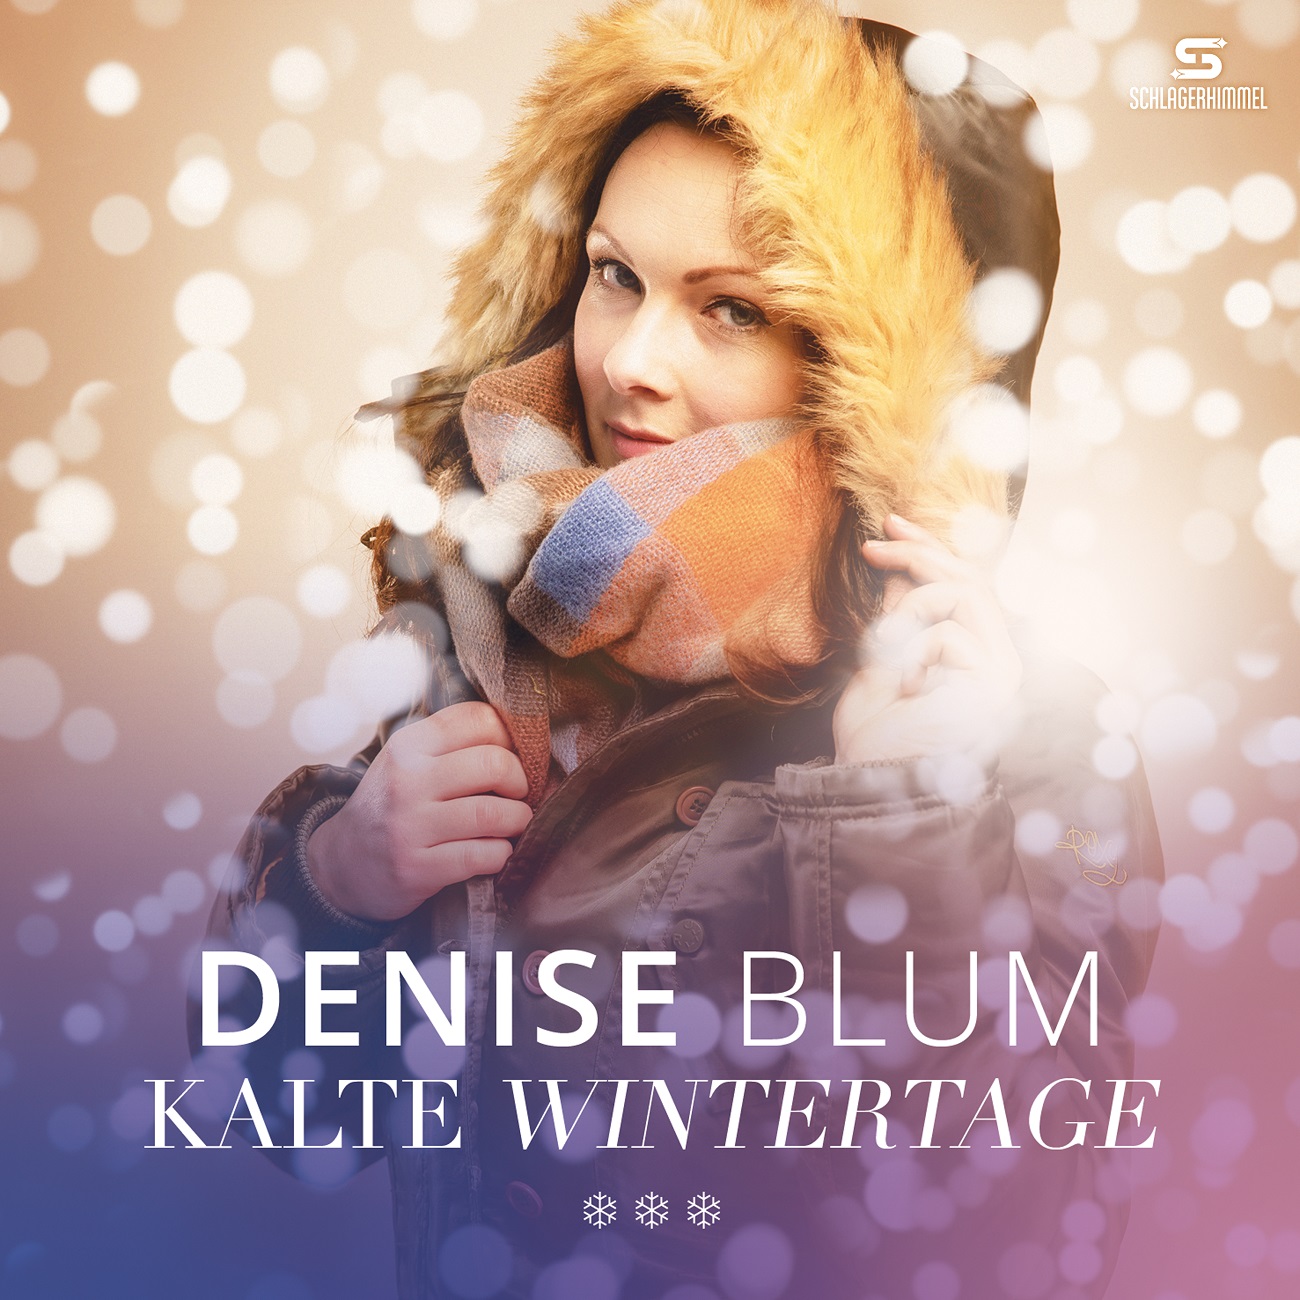 Denise Blum - Kalte Wintertage - Cover 3000.jpg